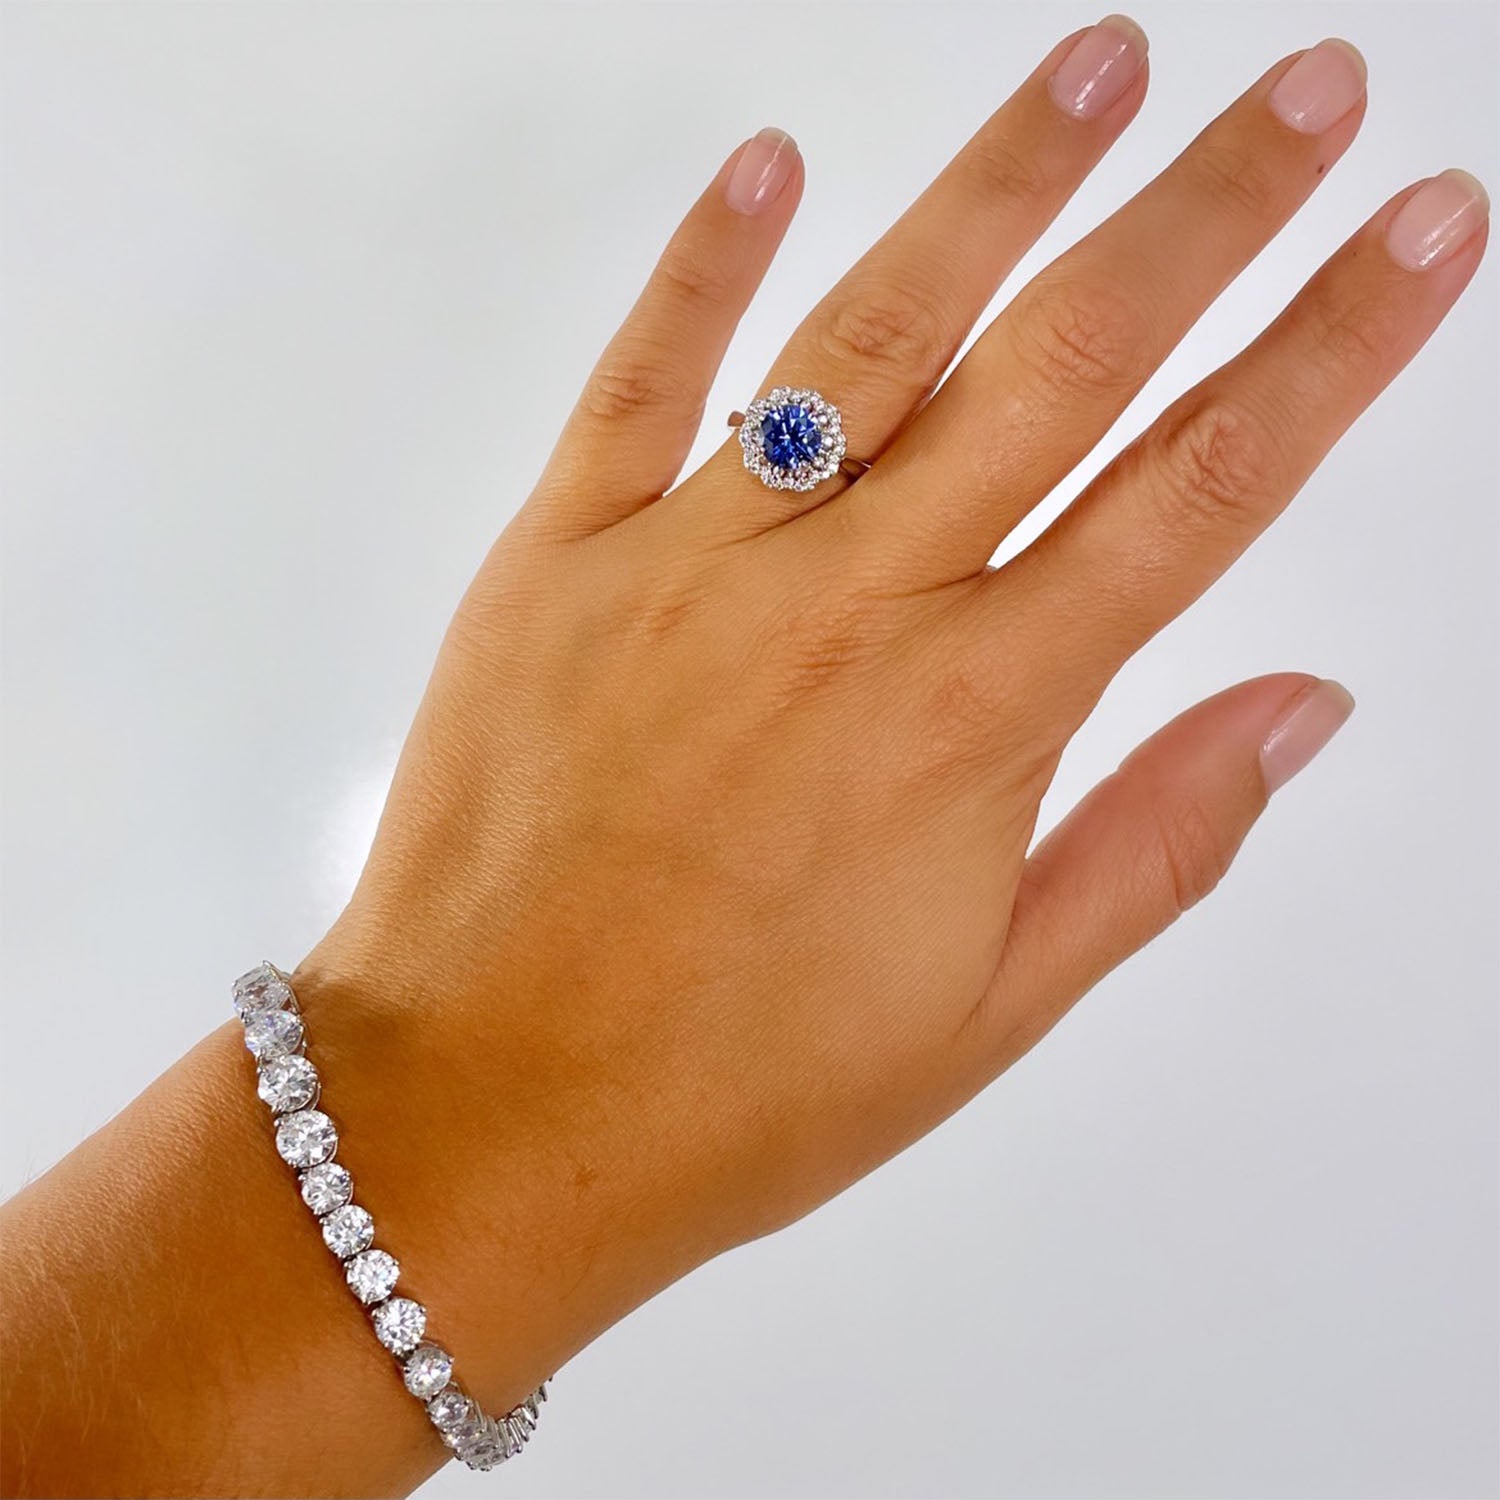 Tory 1.75 Ct. Round CZ Sapphire Ring, Silver - Zahra Jewelry